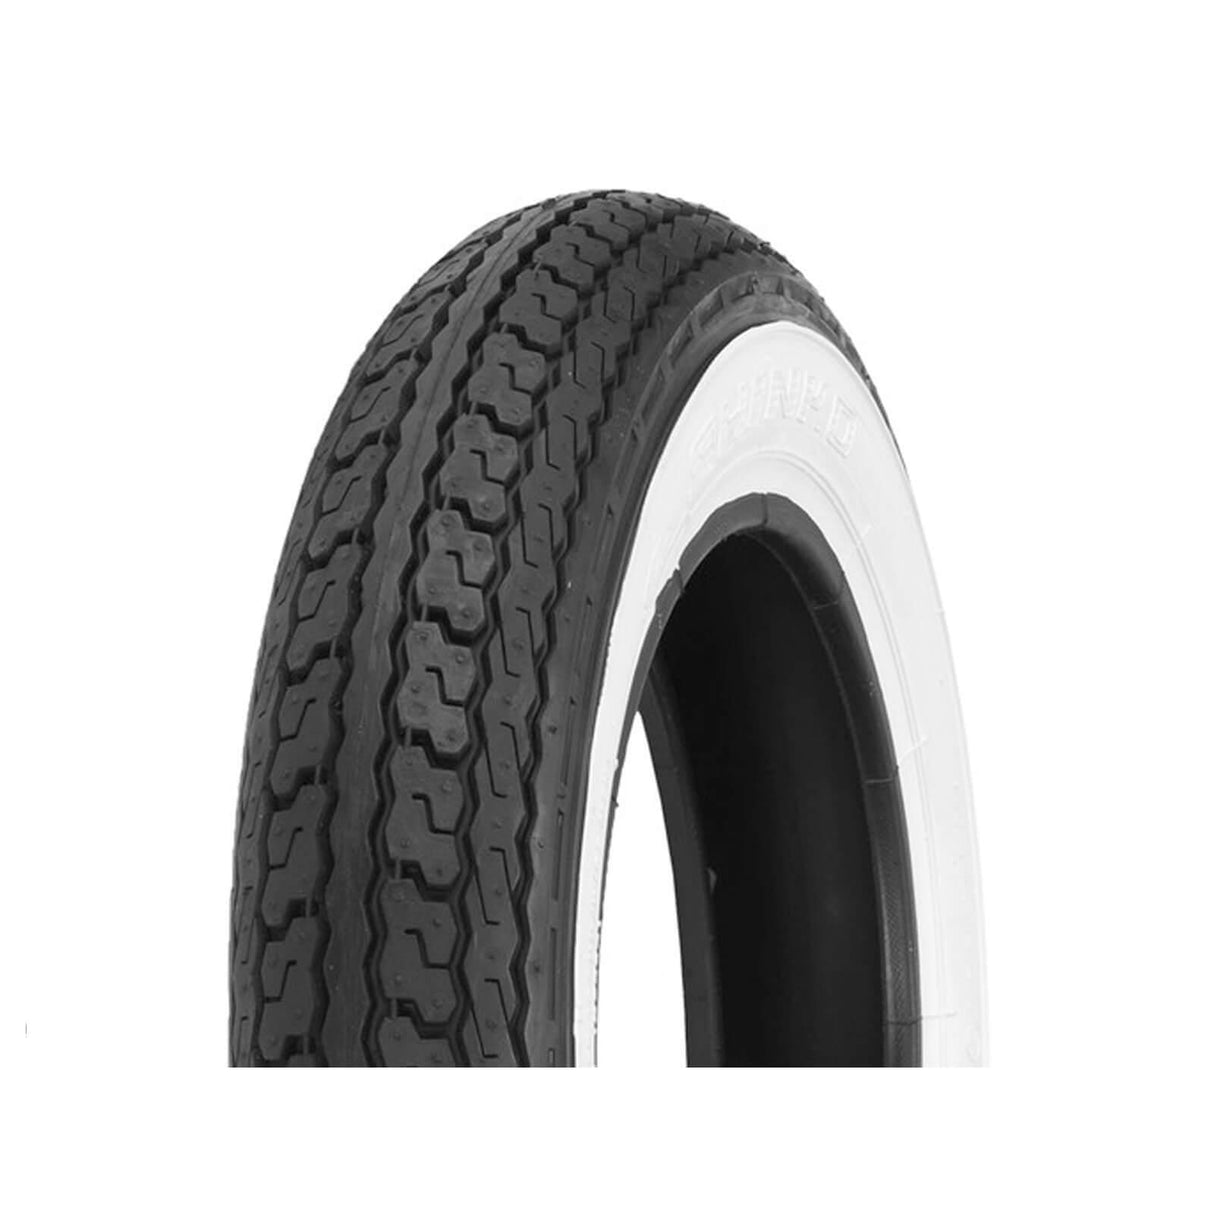 3.00-10 SR550 White Wall Shinko Scooter Tyre